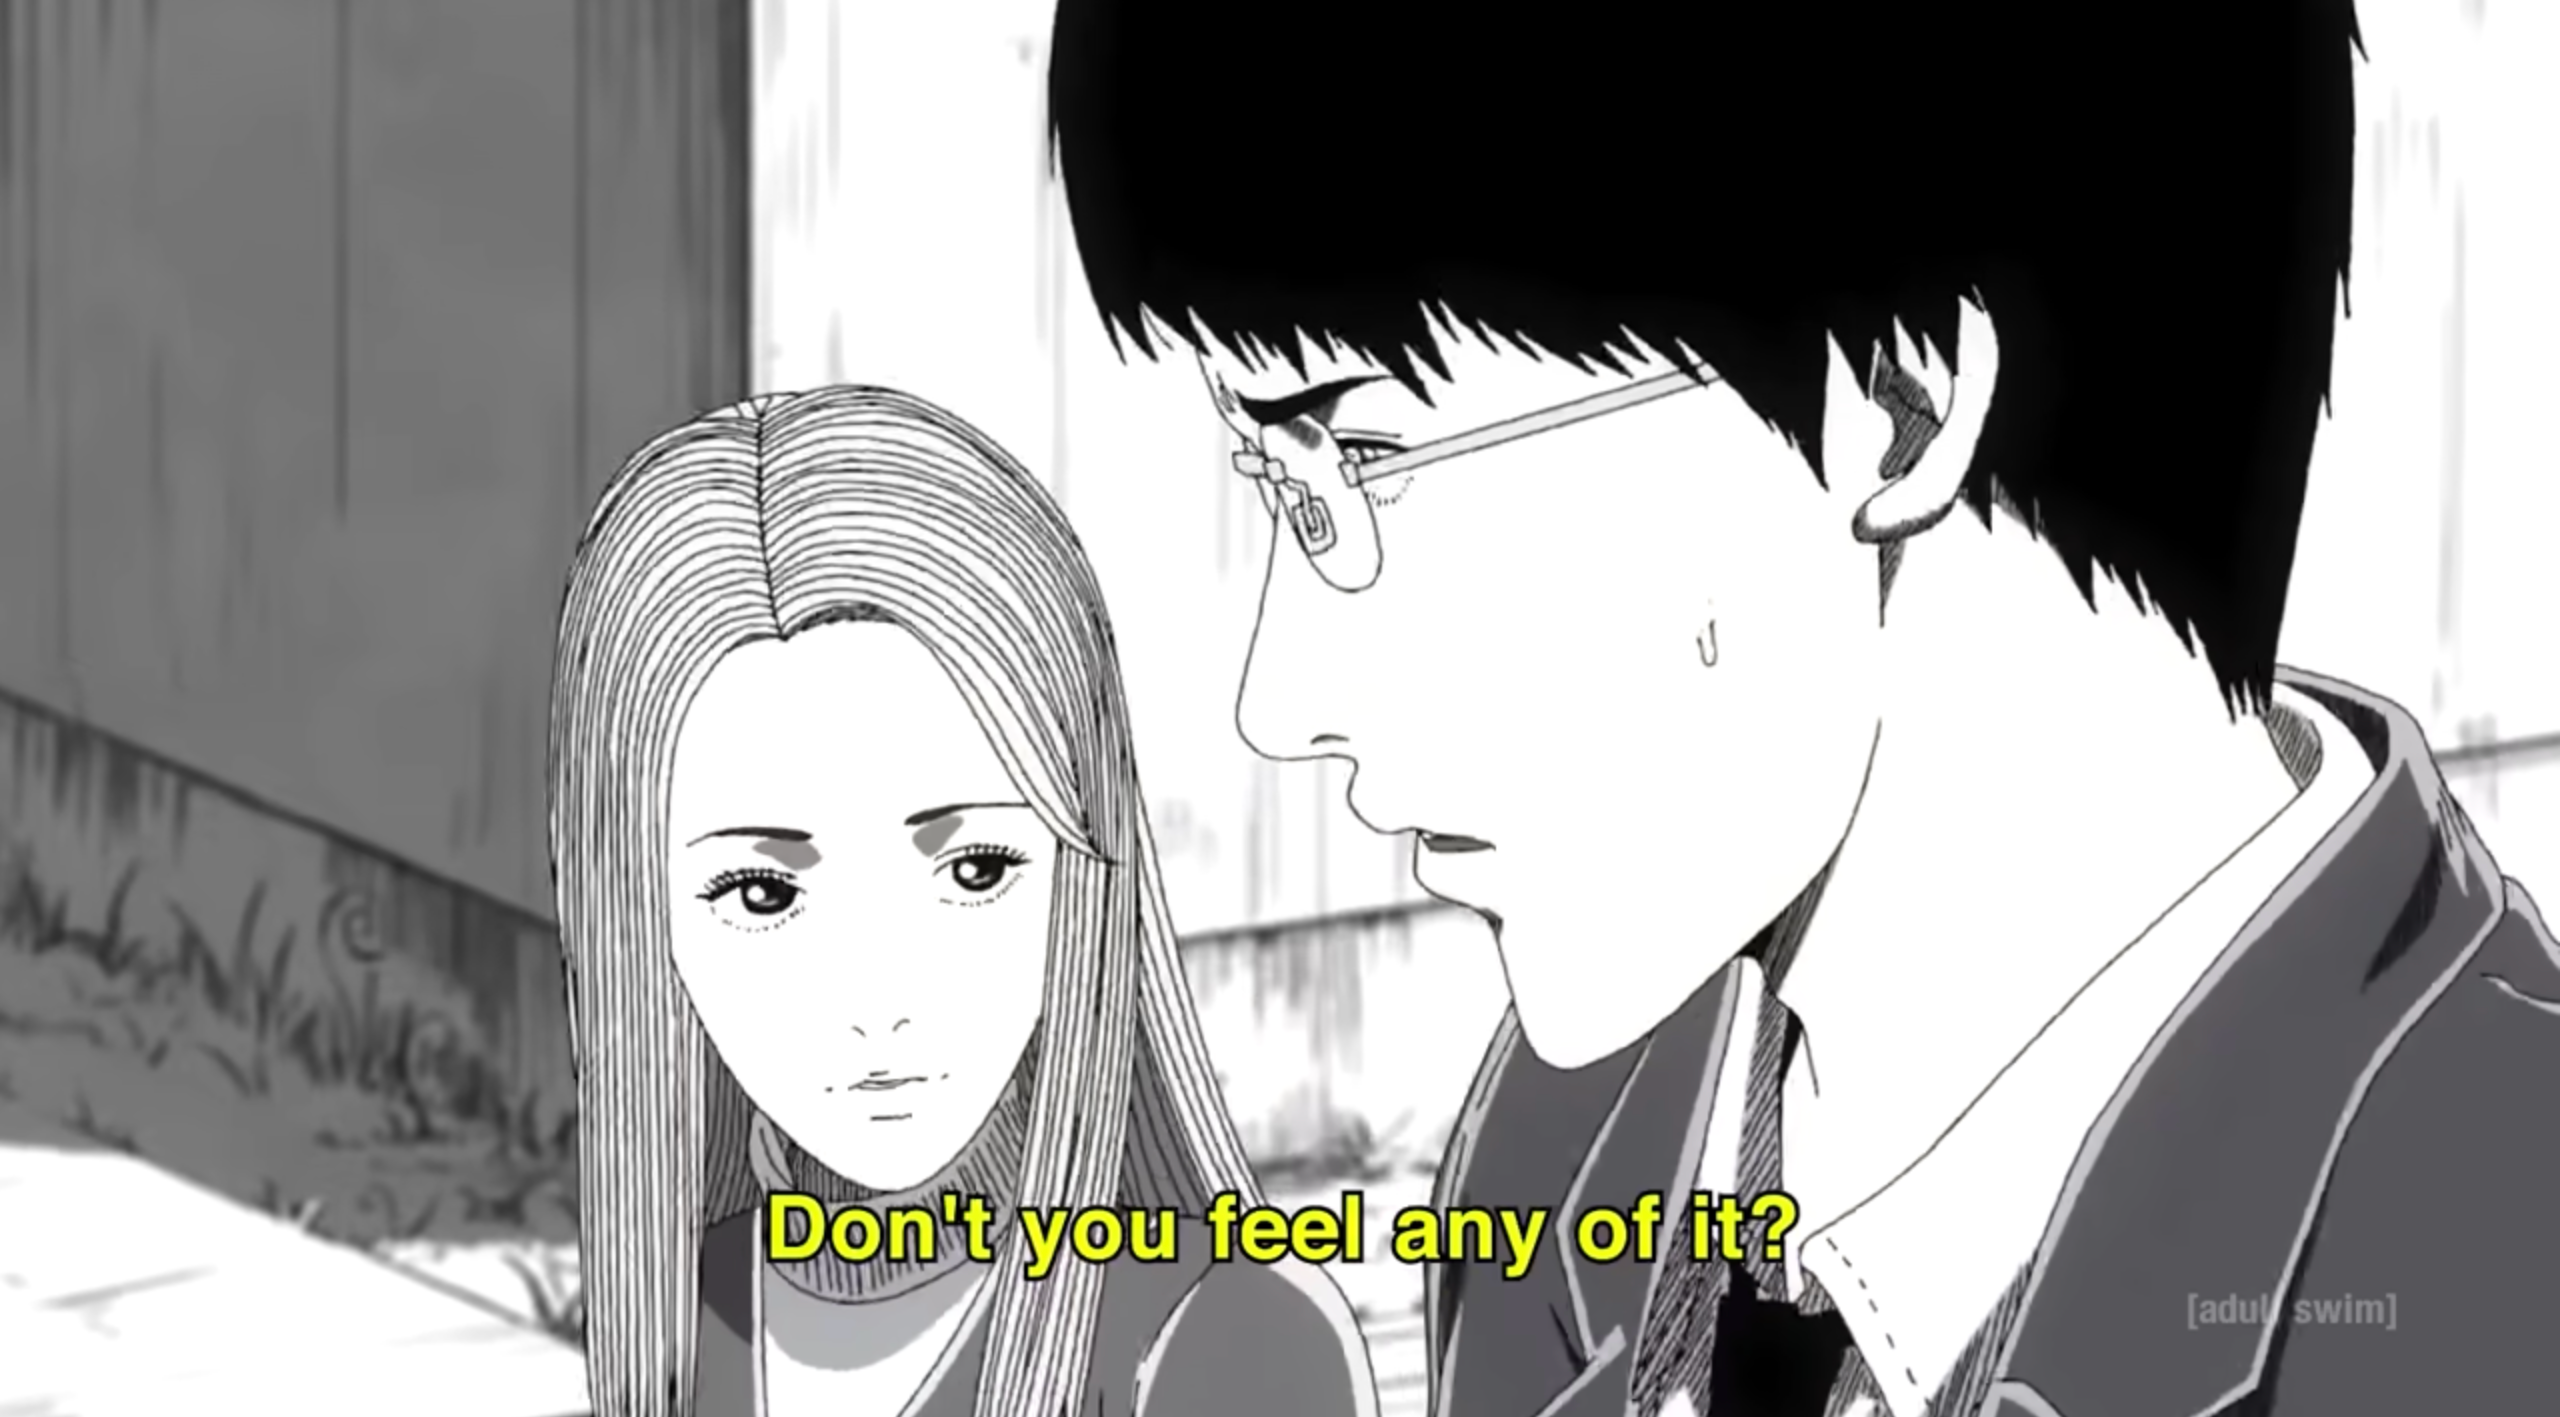 Spirale: Junji Ito's most terrifying manga comes to anime - Trailer 